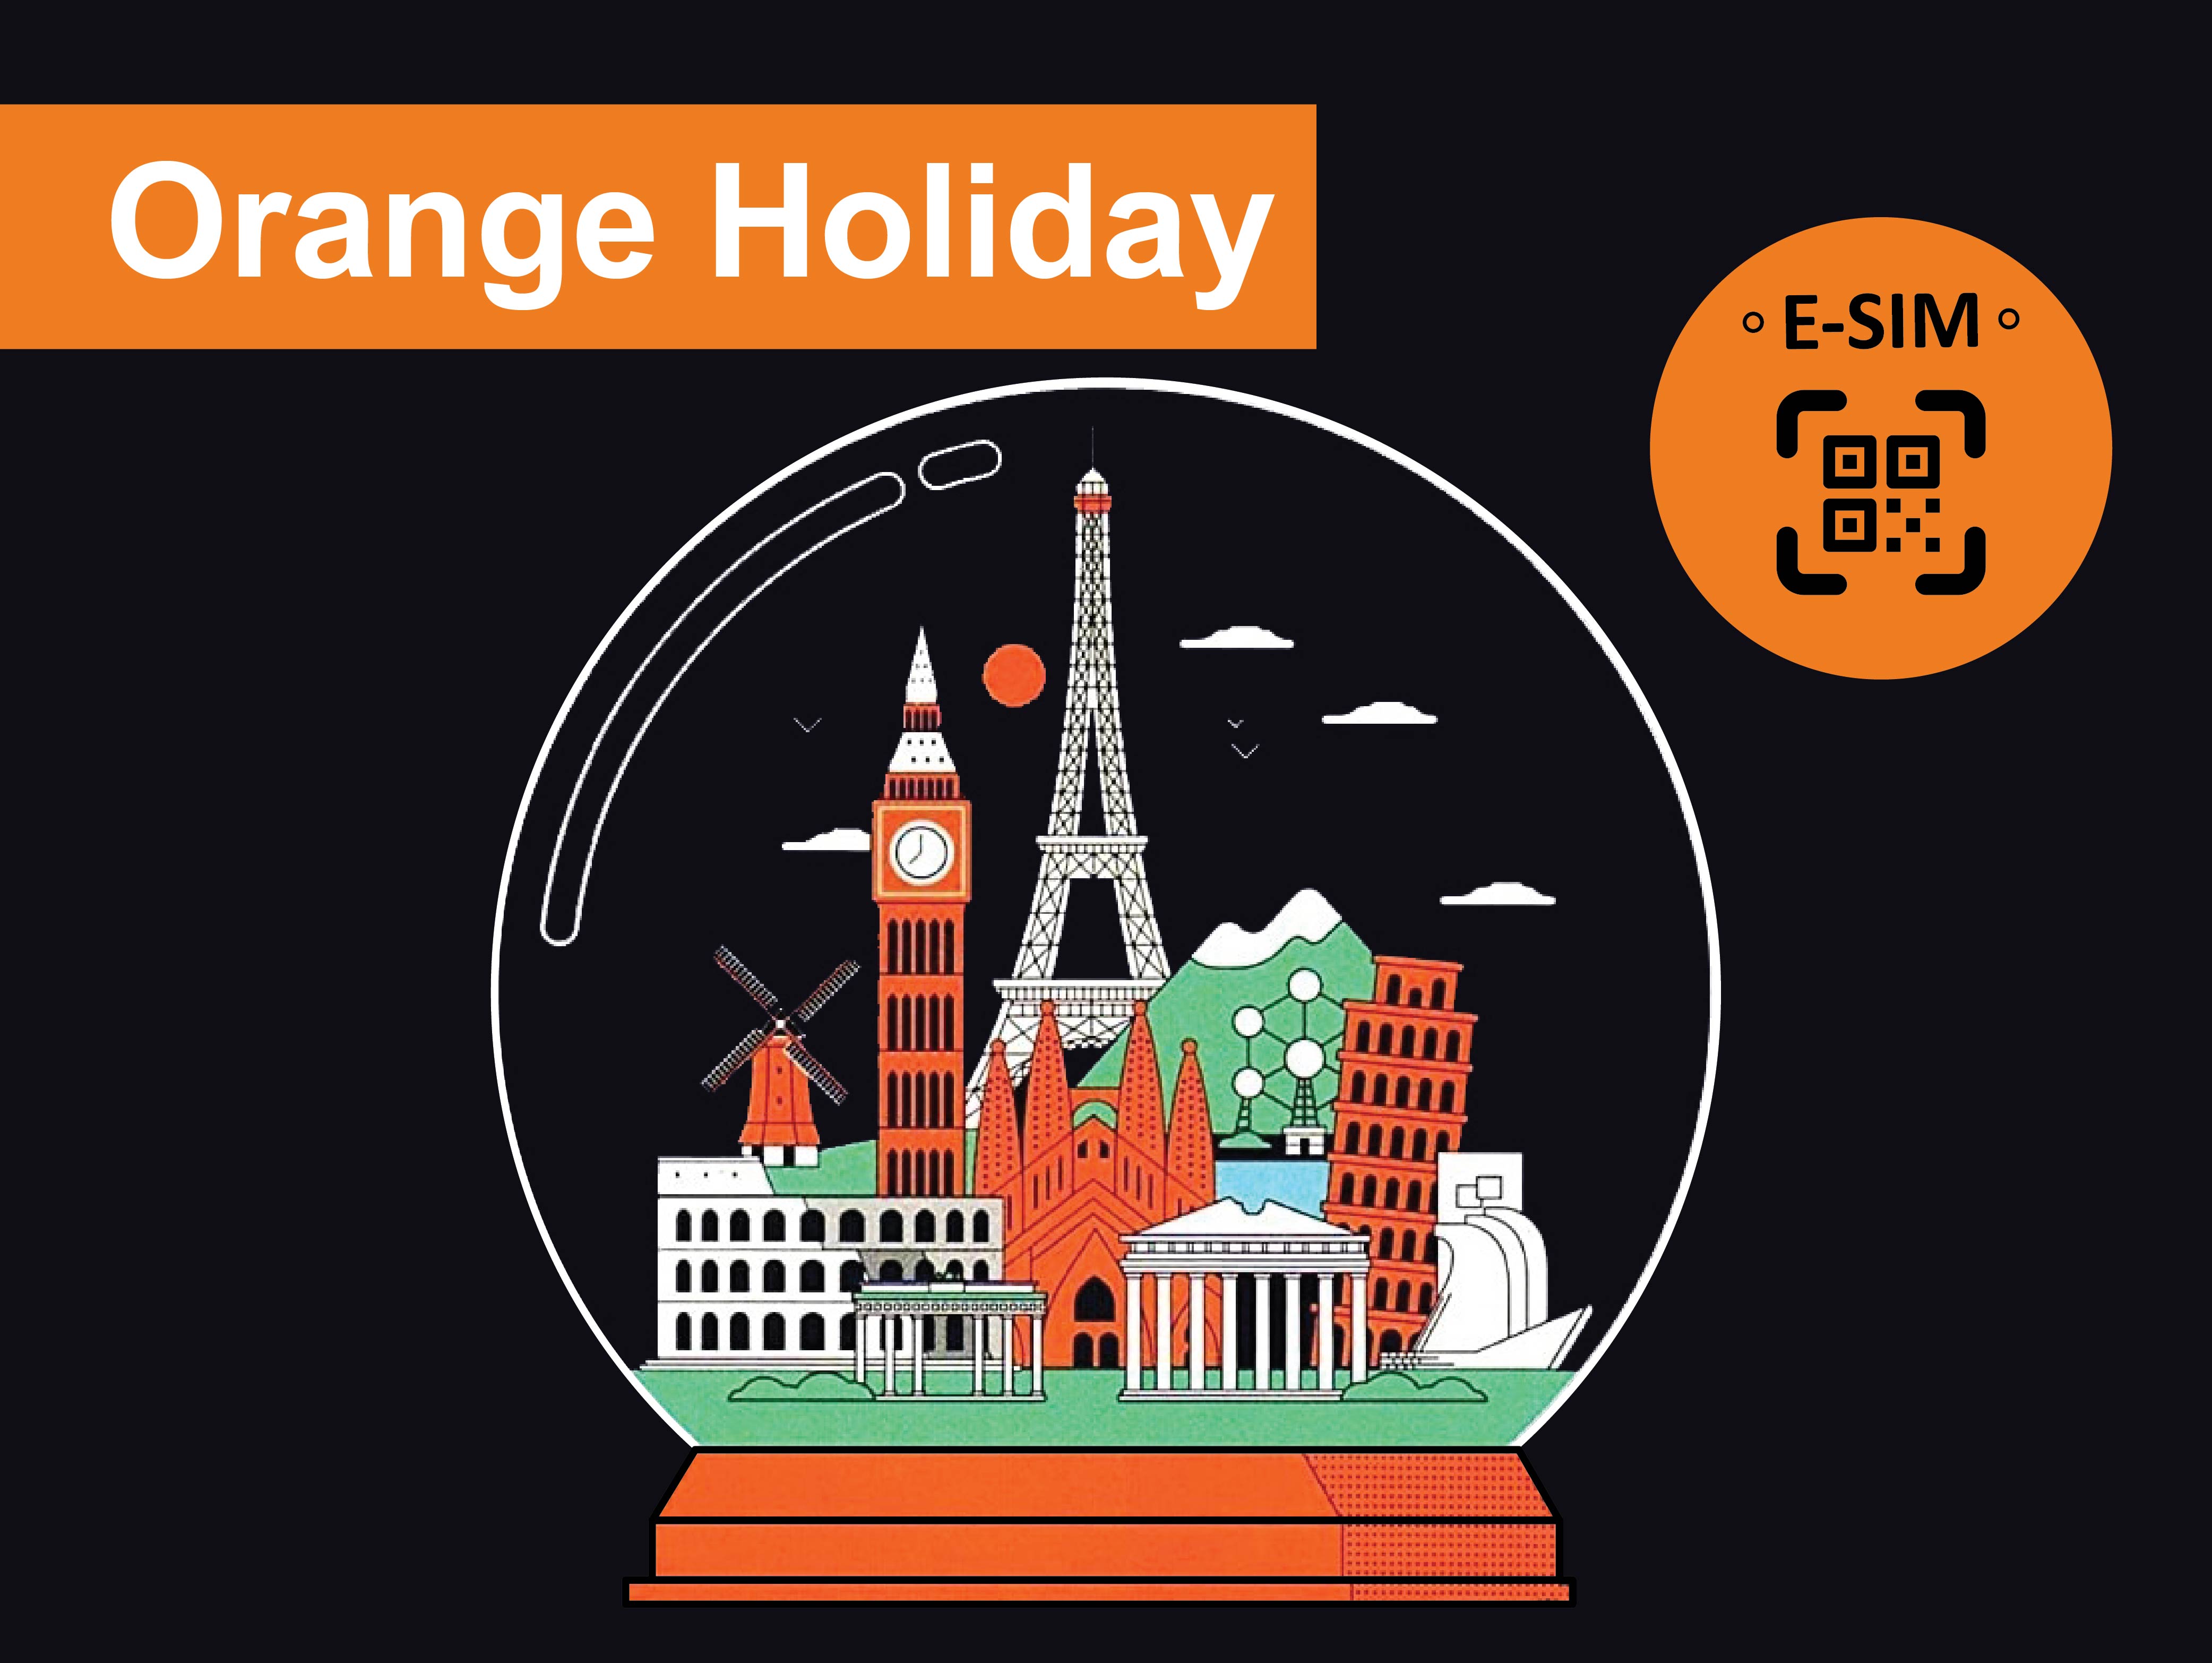 eSIM | Orange Holiday